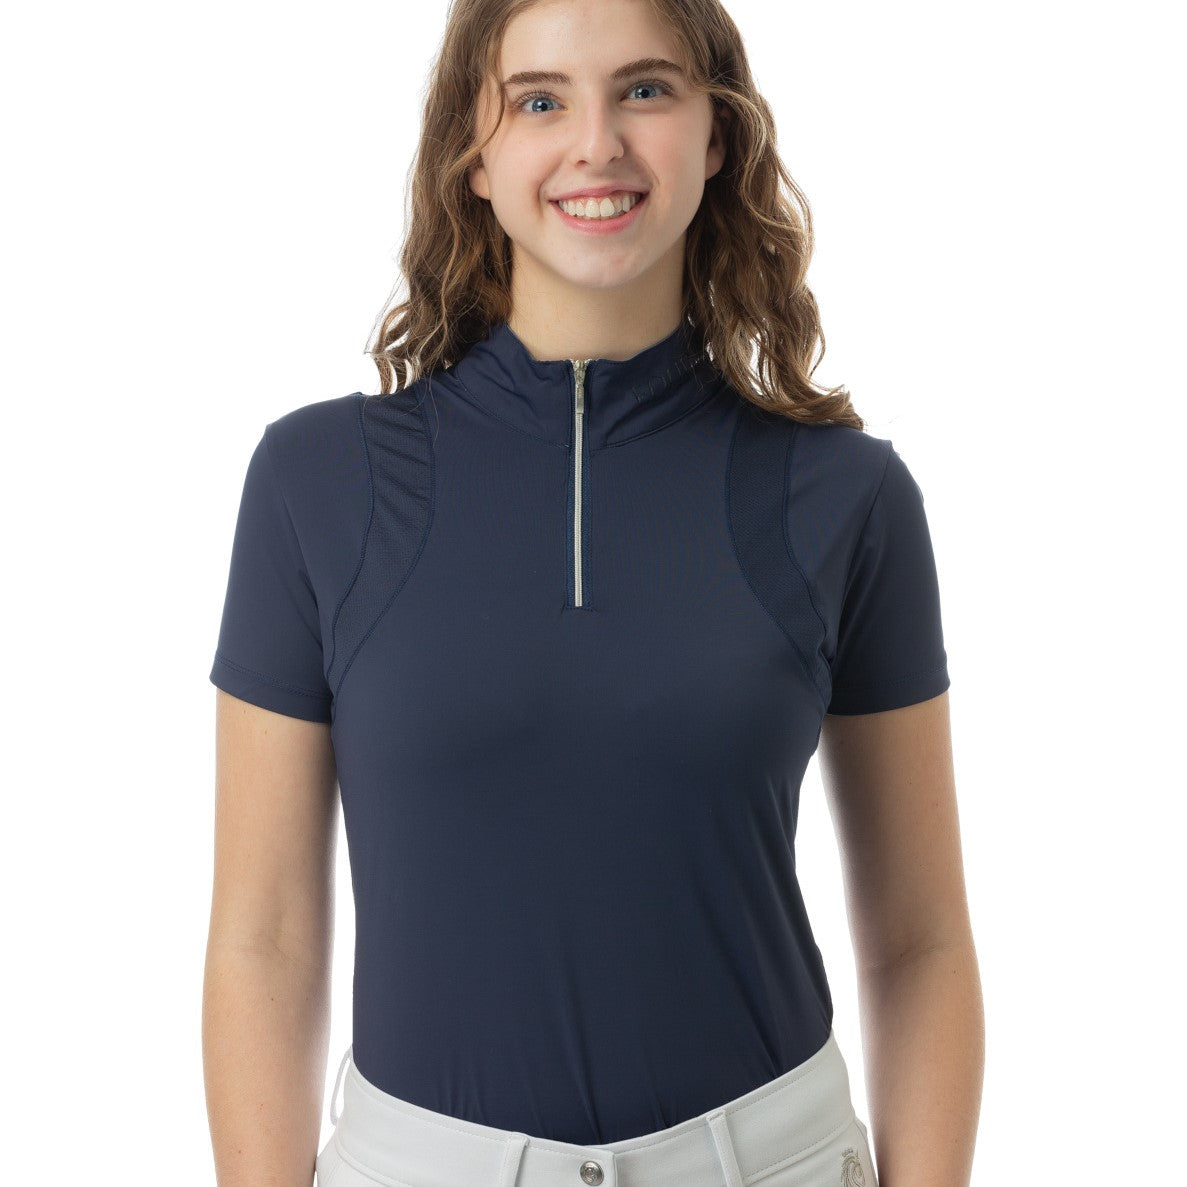 Equinavia Selma Womens NordicAir Short Sleeve Sun Shirt